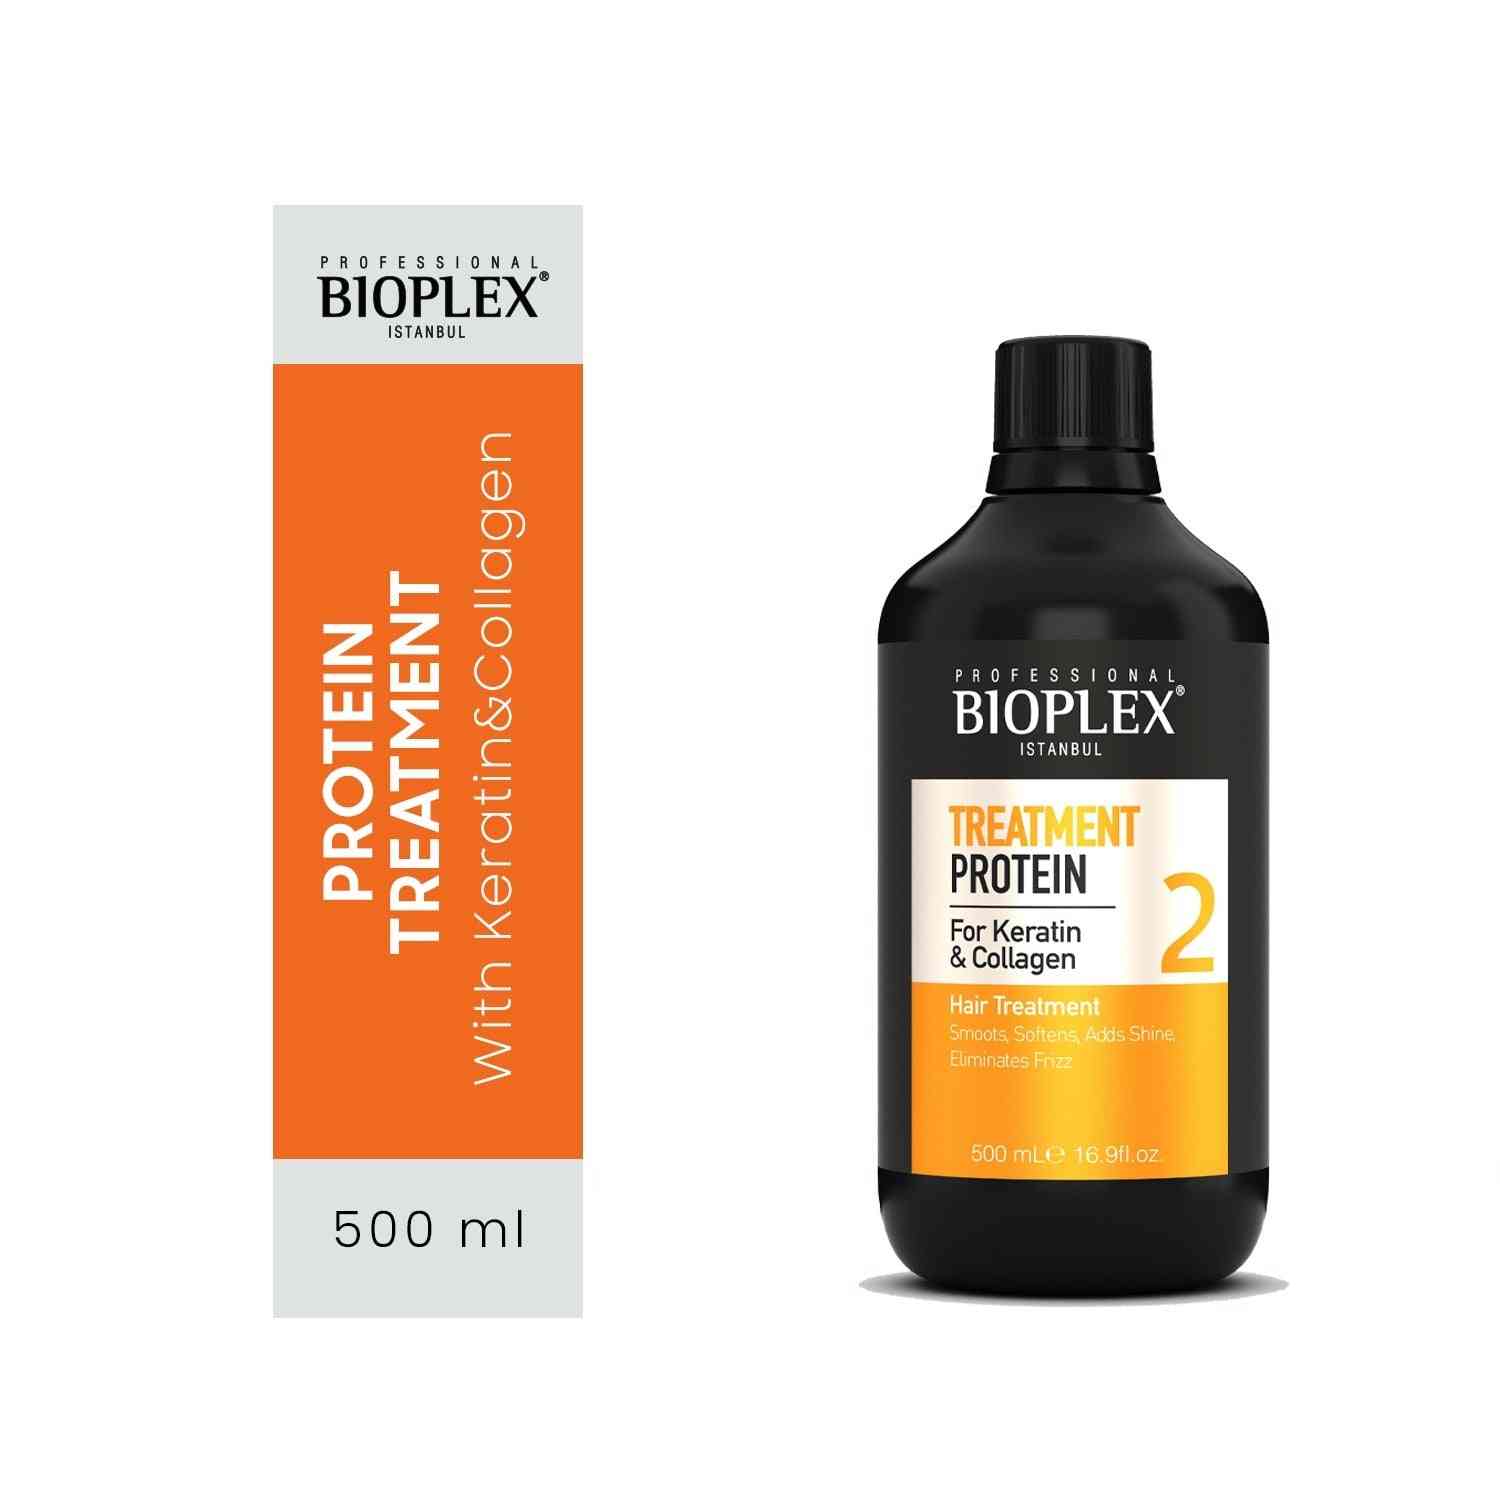 Bioplex Treatment Protein Hair Care Keratin Treatment